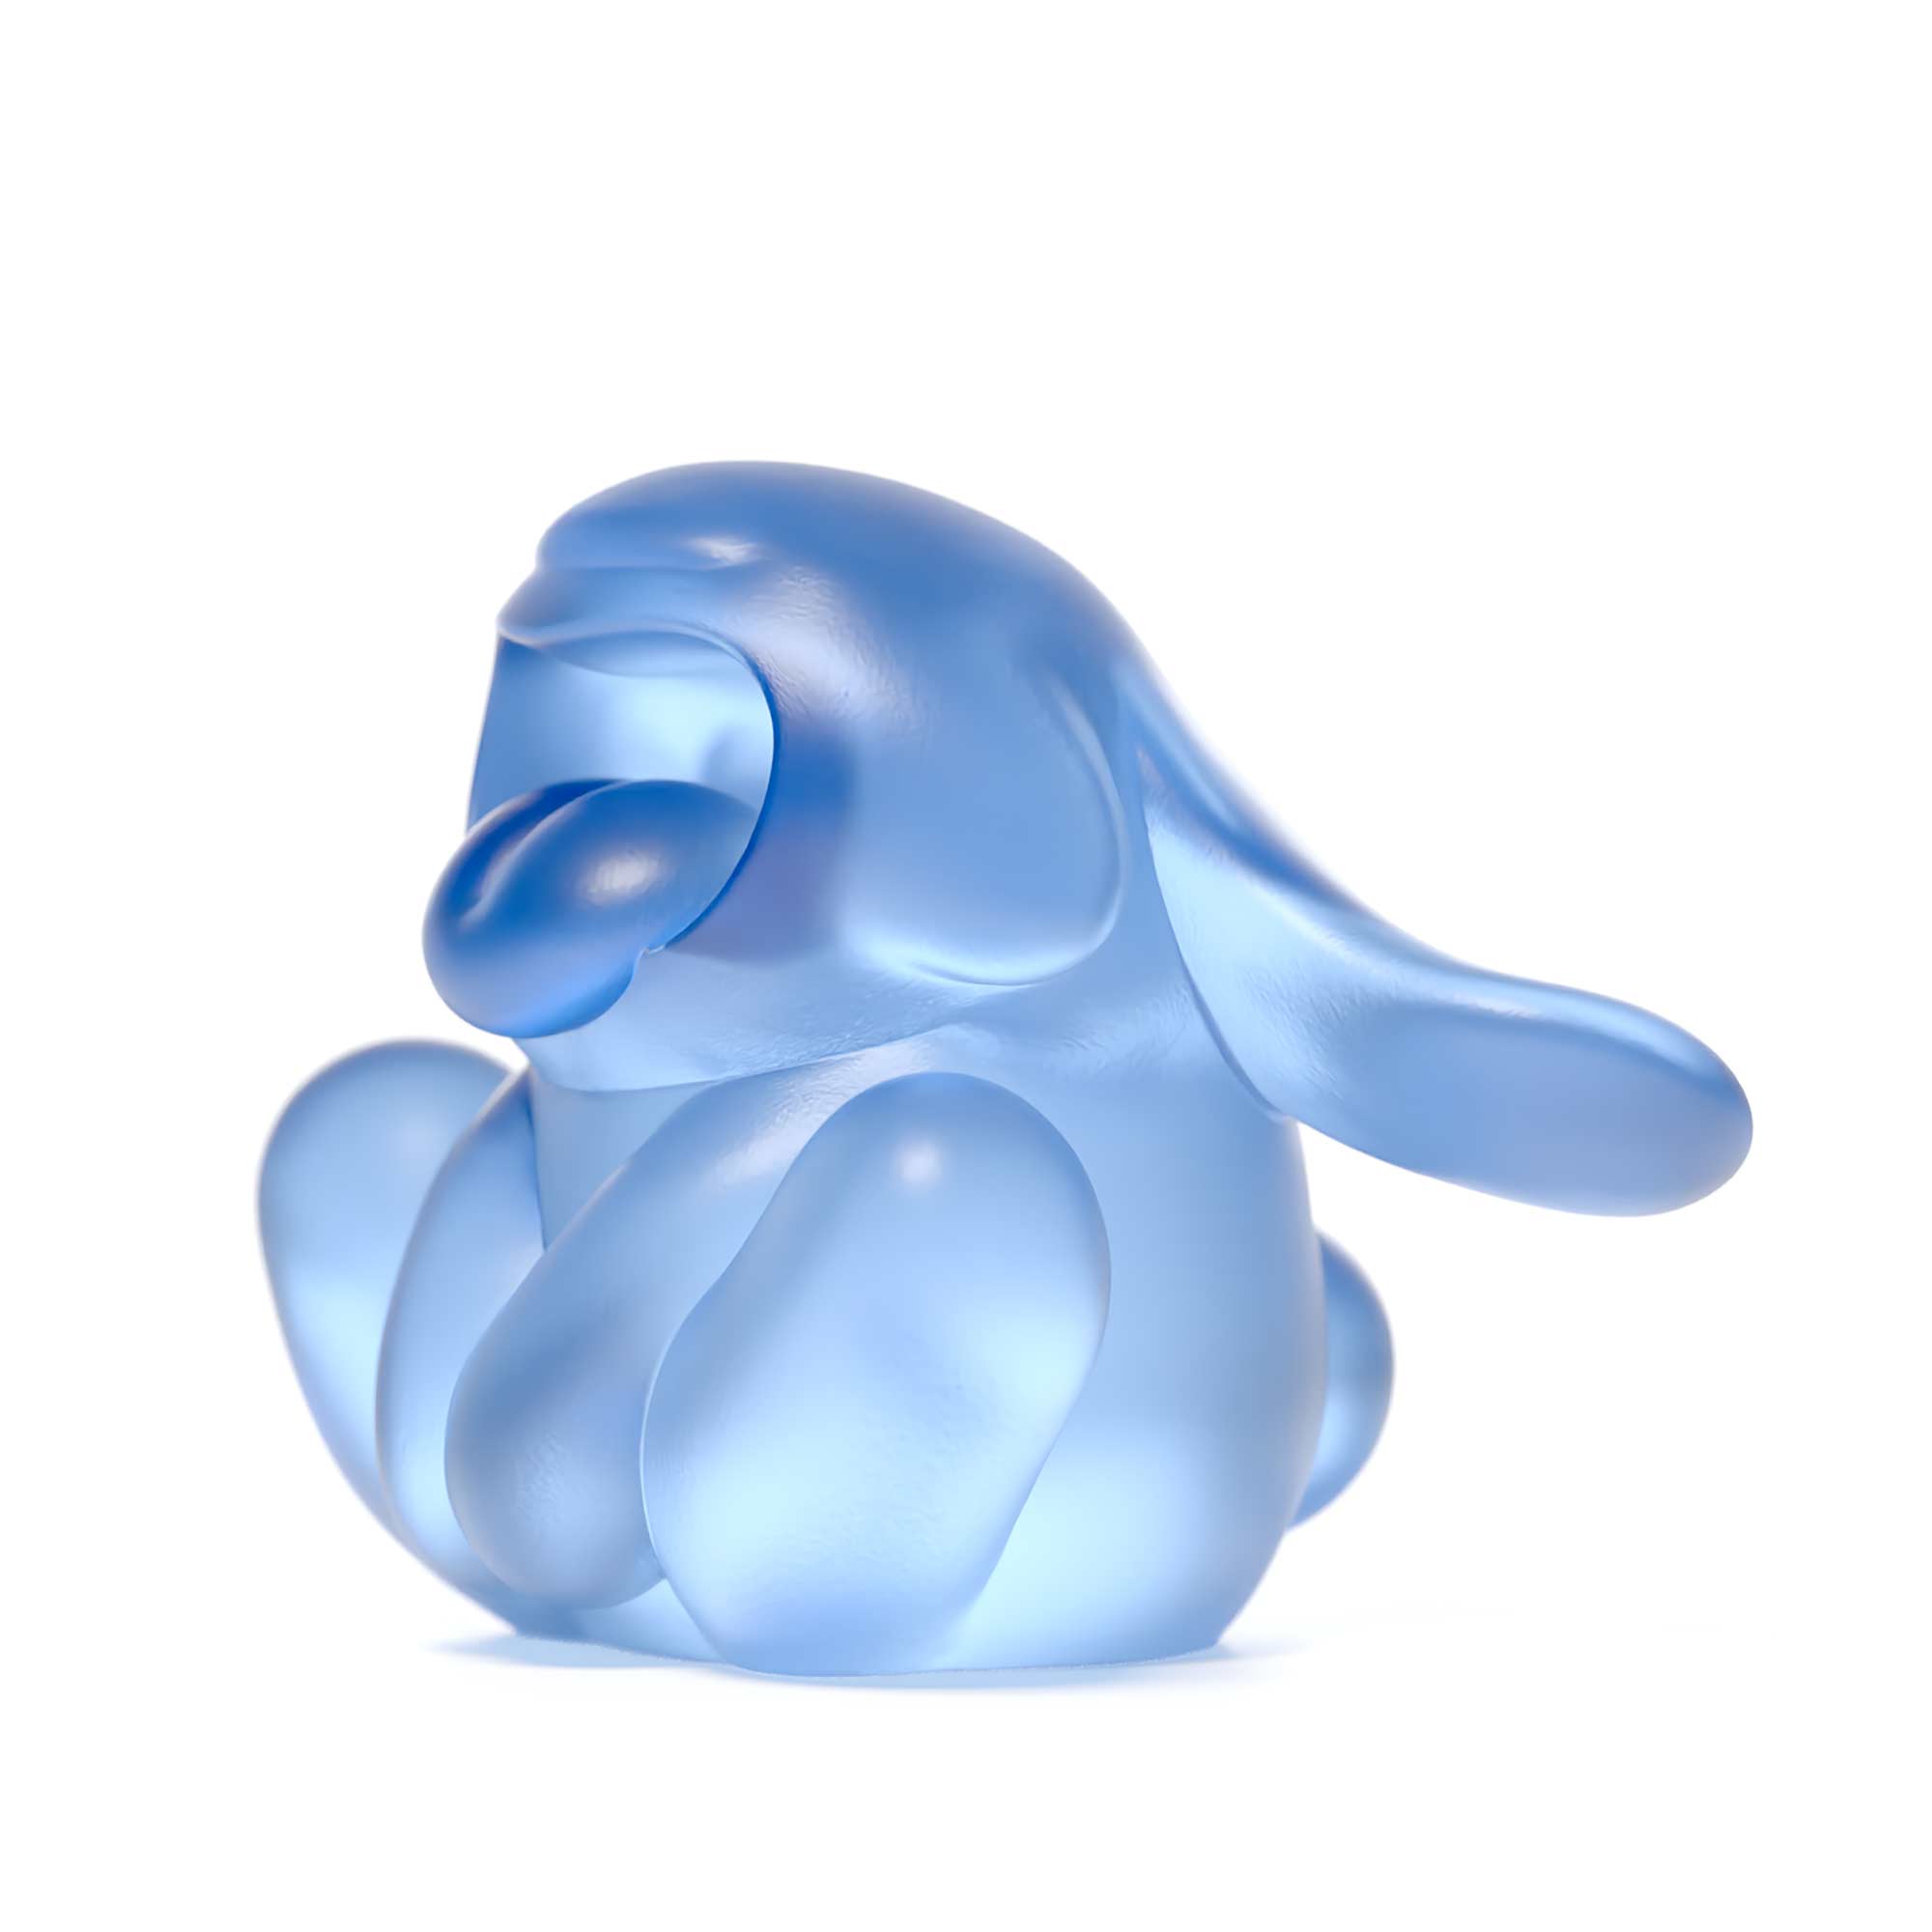 "Bunnie Roar Crystal," a sculpture, blue color, is an artistic creation by Ferdi B Dick 01 